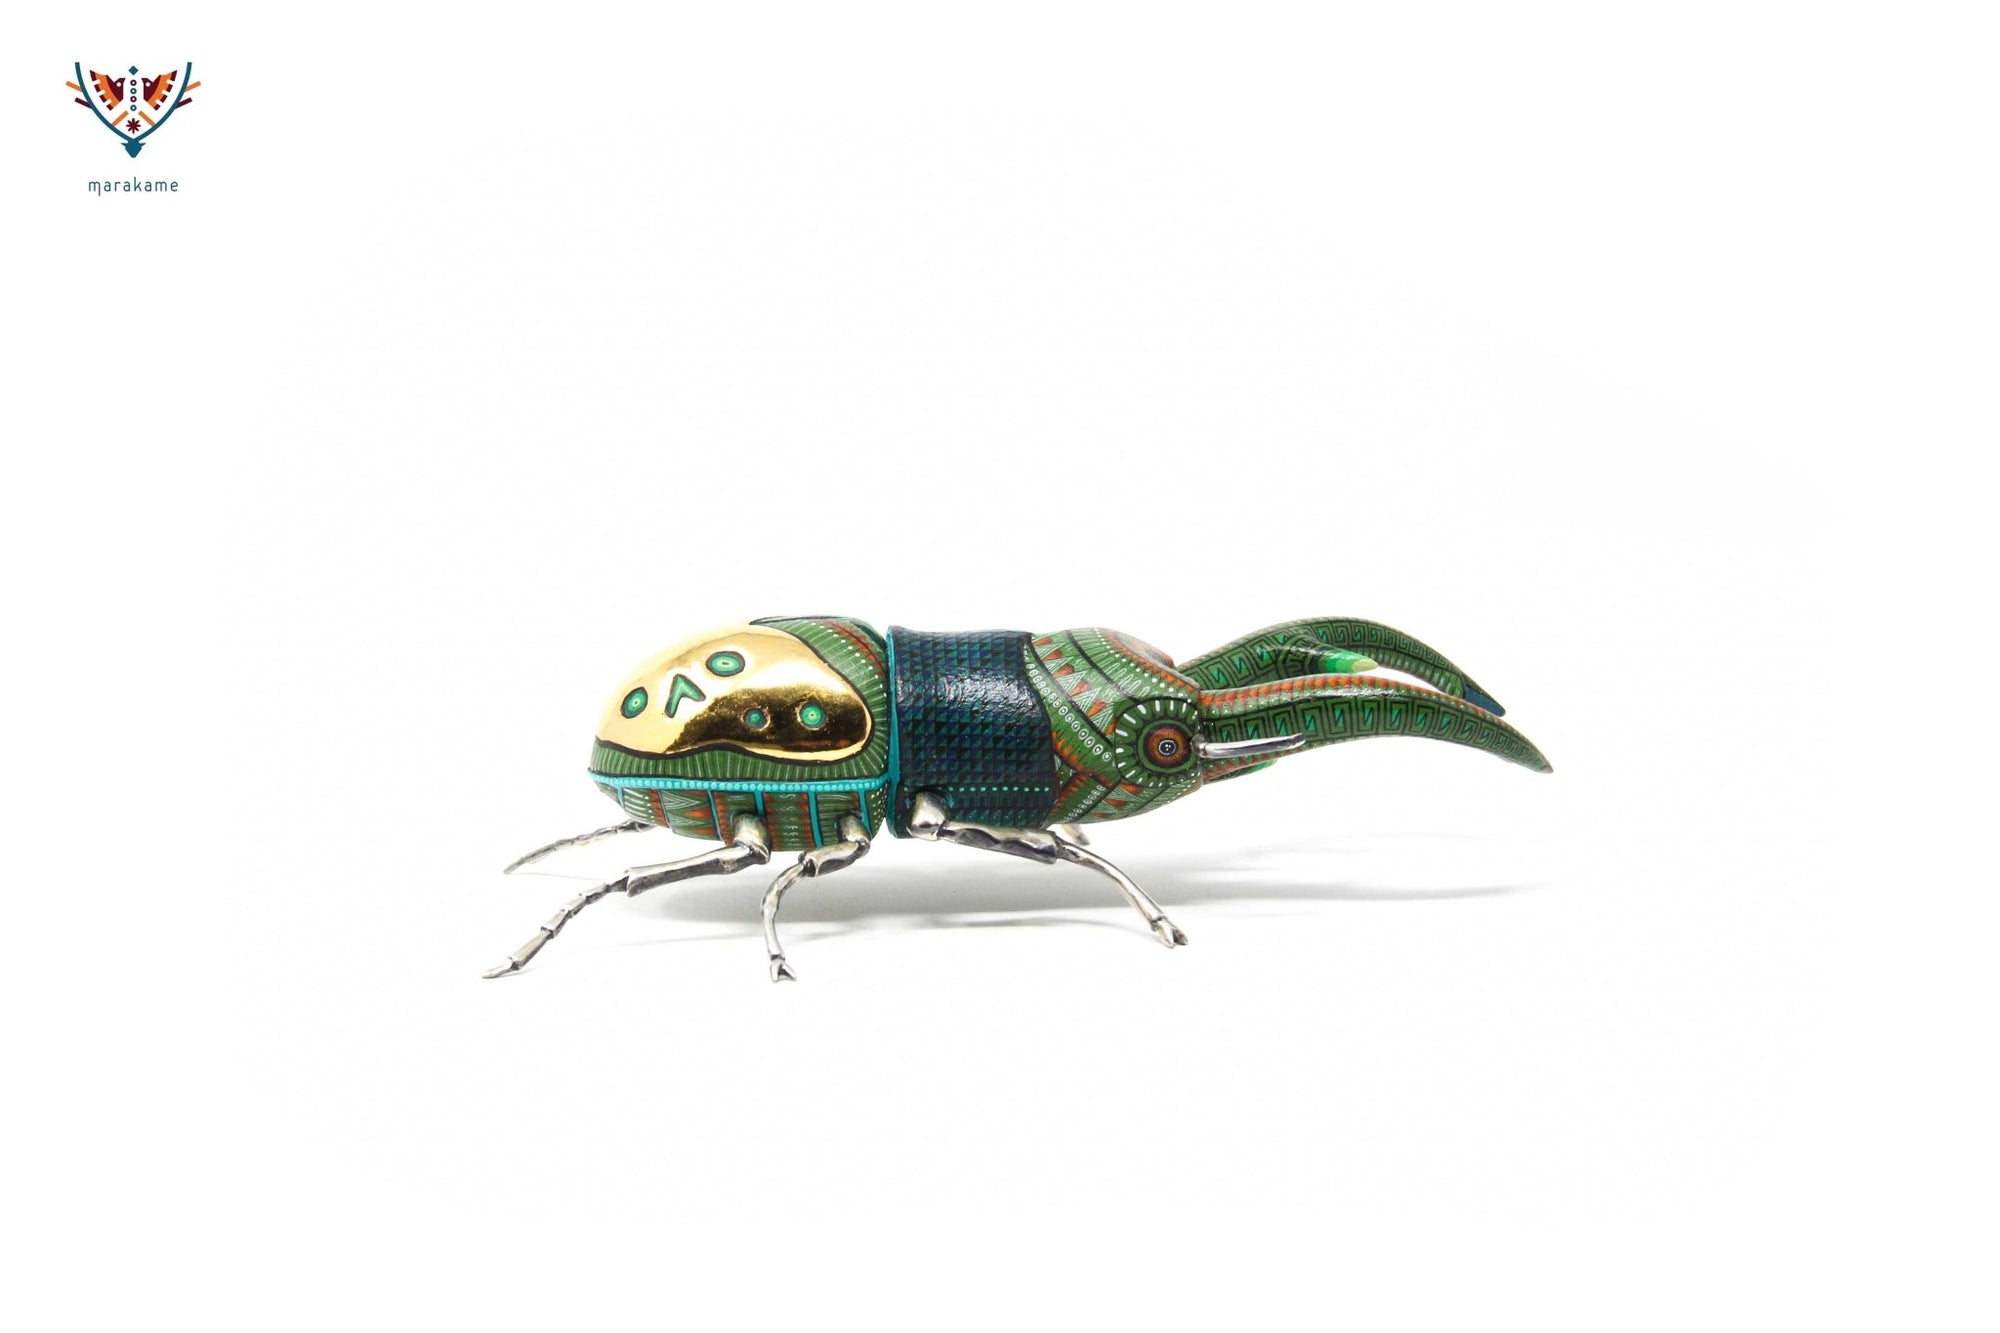 Coléoptère femelle - Witol yee XIII - Huichol Art - Marakame